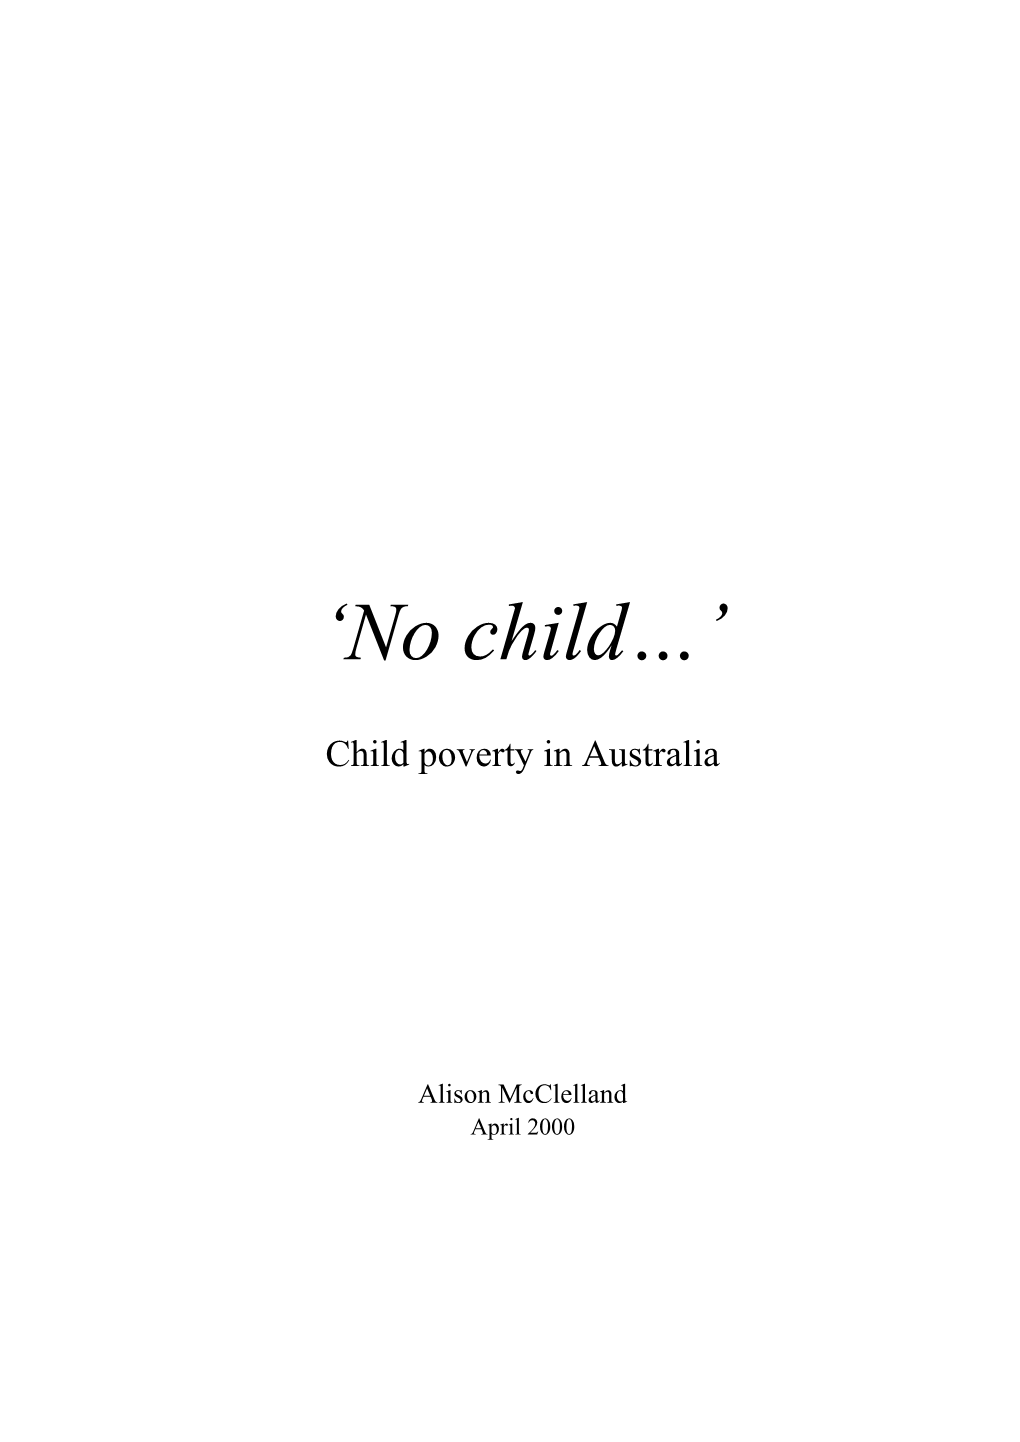 Child Poverty in Australia